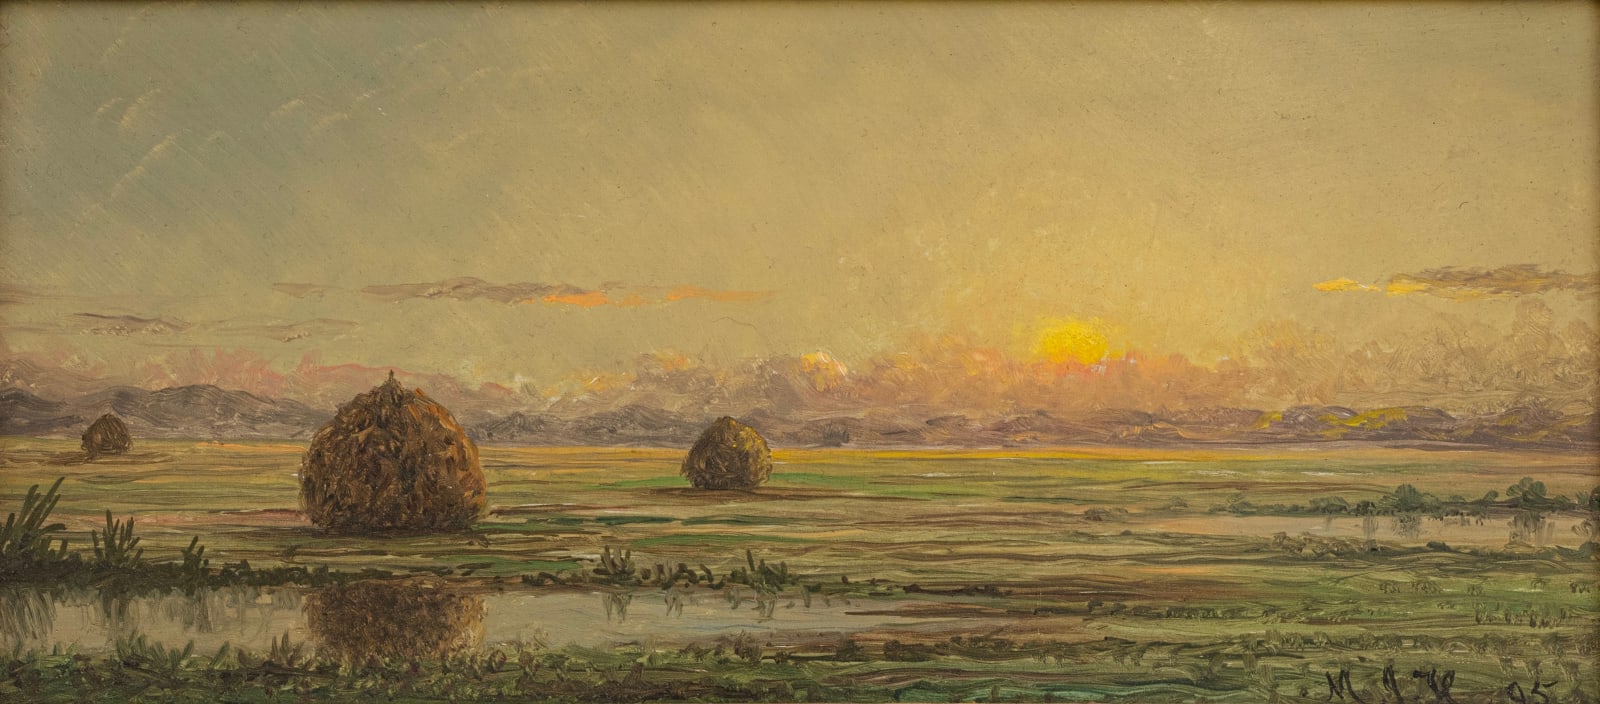 Martin Johnson Heade, Sunset—A Sketch, 1895